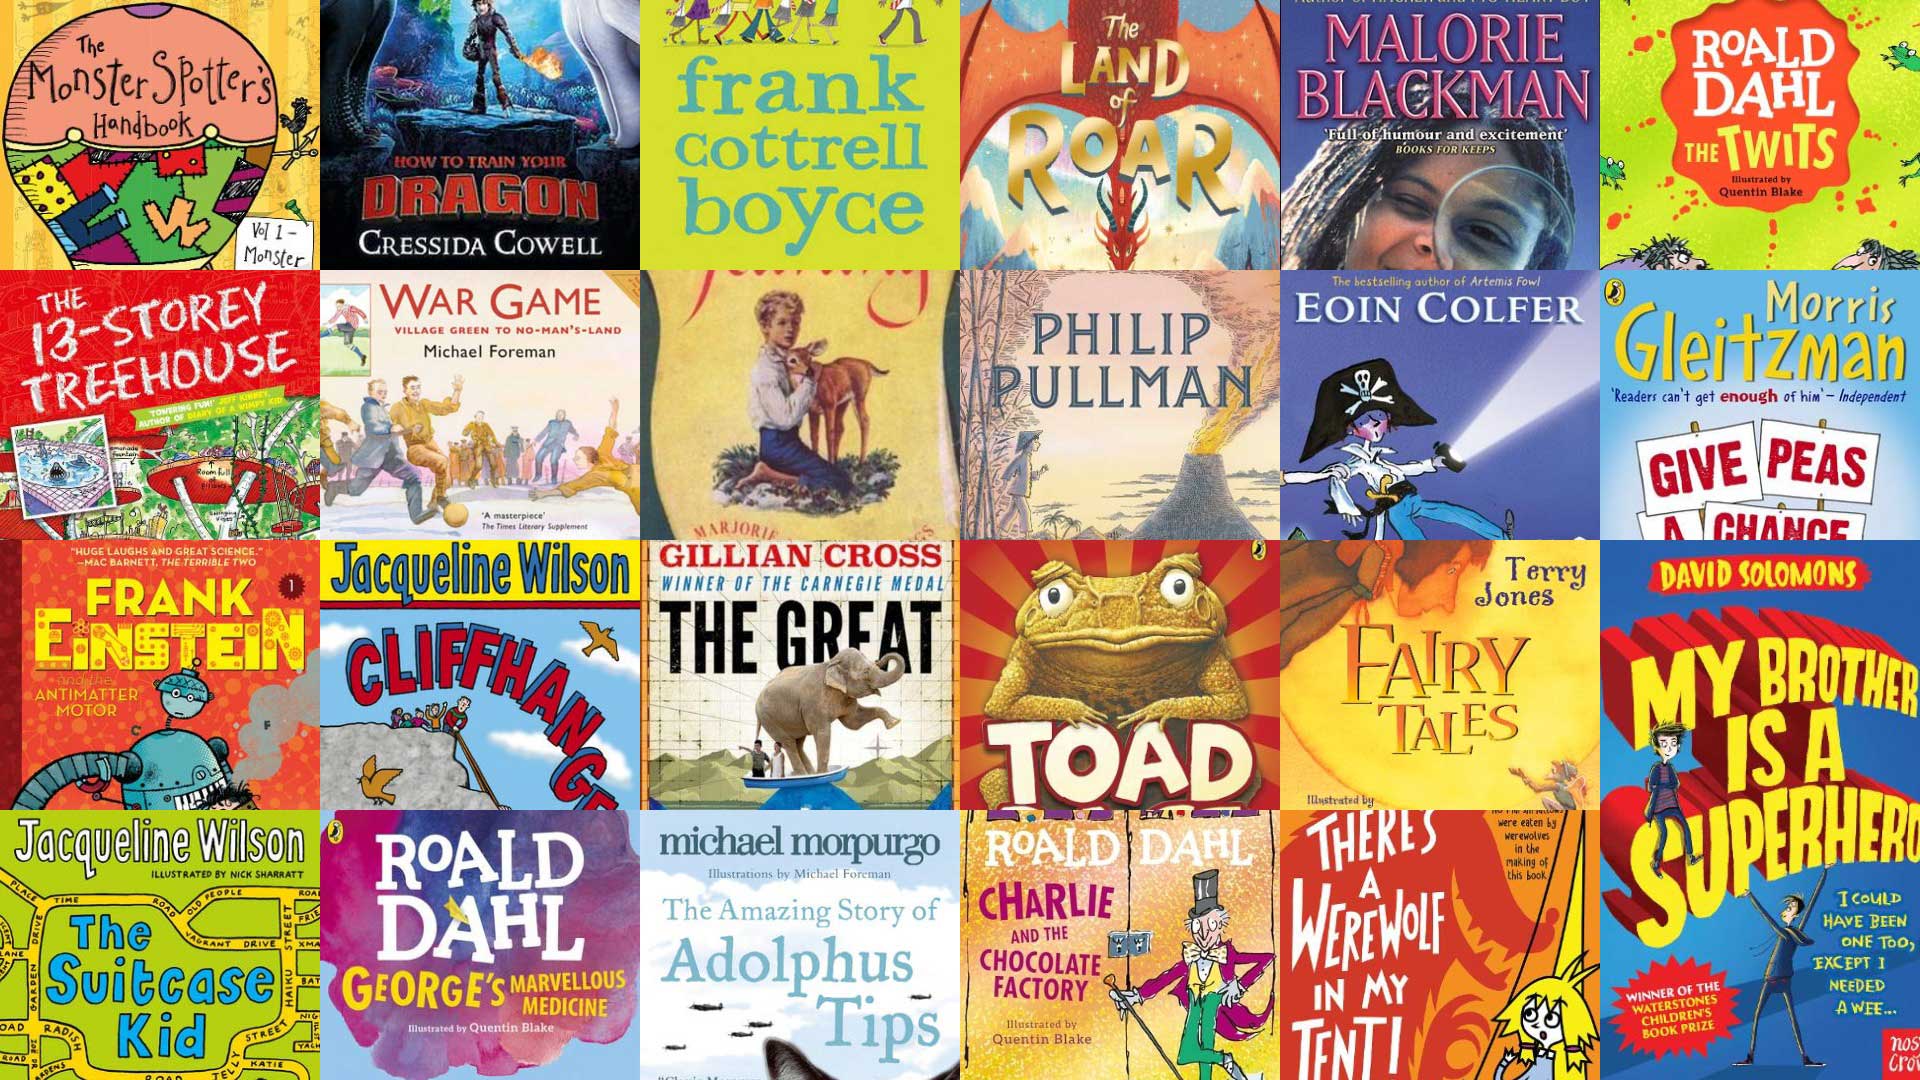 Books for Year 4 children aged 8-9 | School Reading List